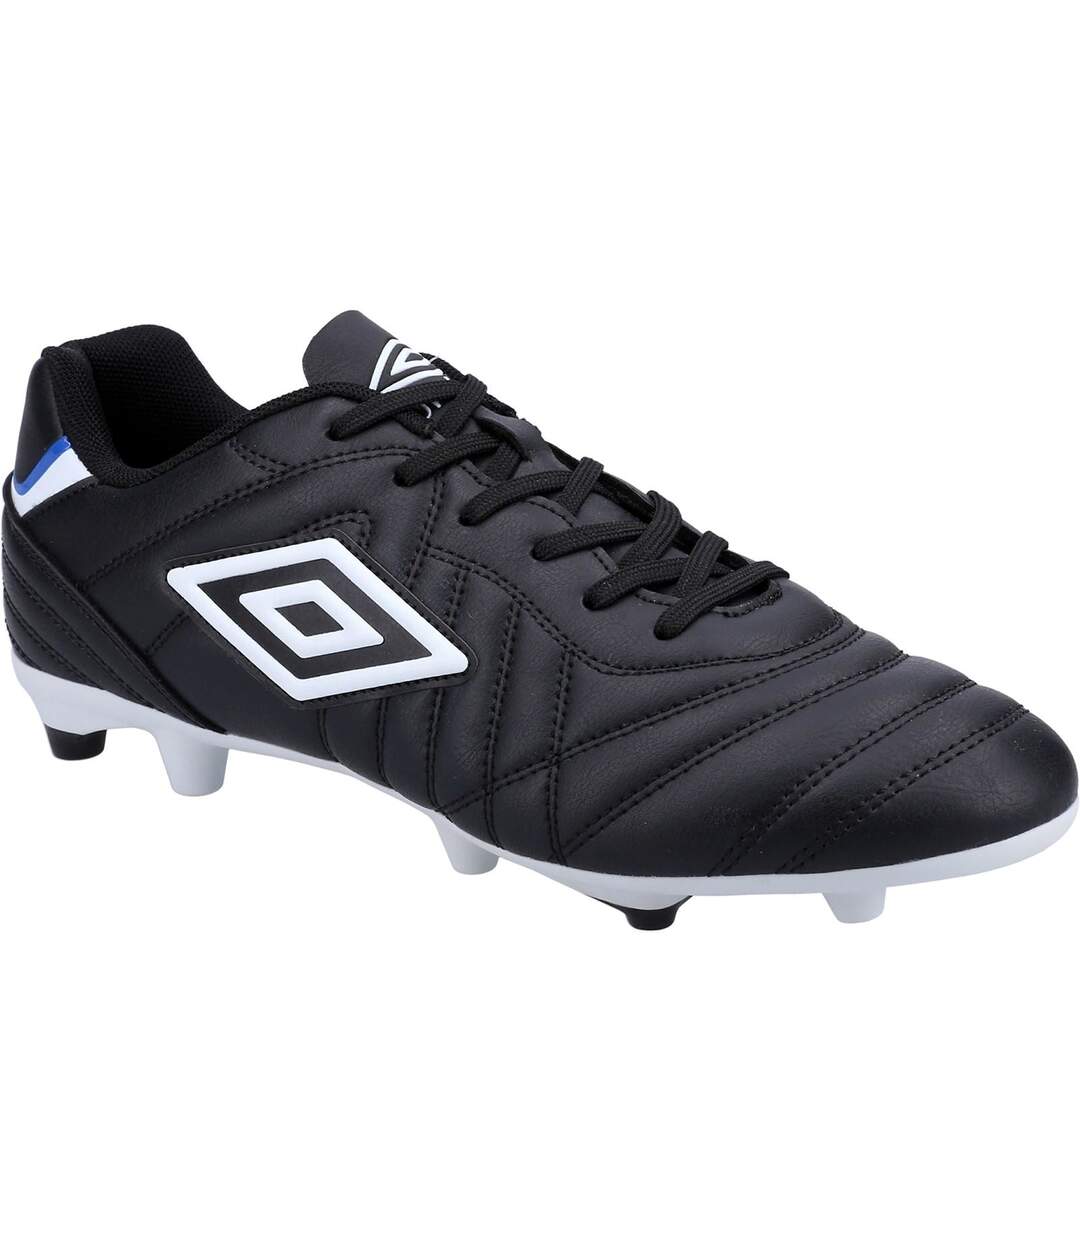 Umbro Mens Speciali Liga Leather Soccer Cleats (Black/White)